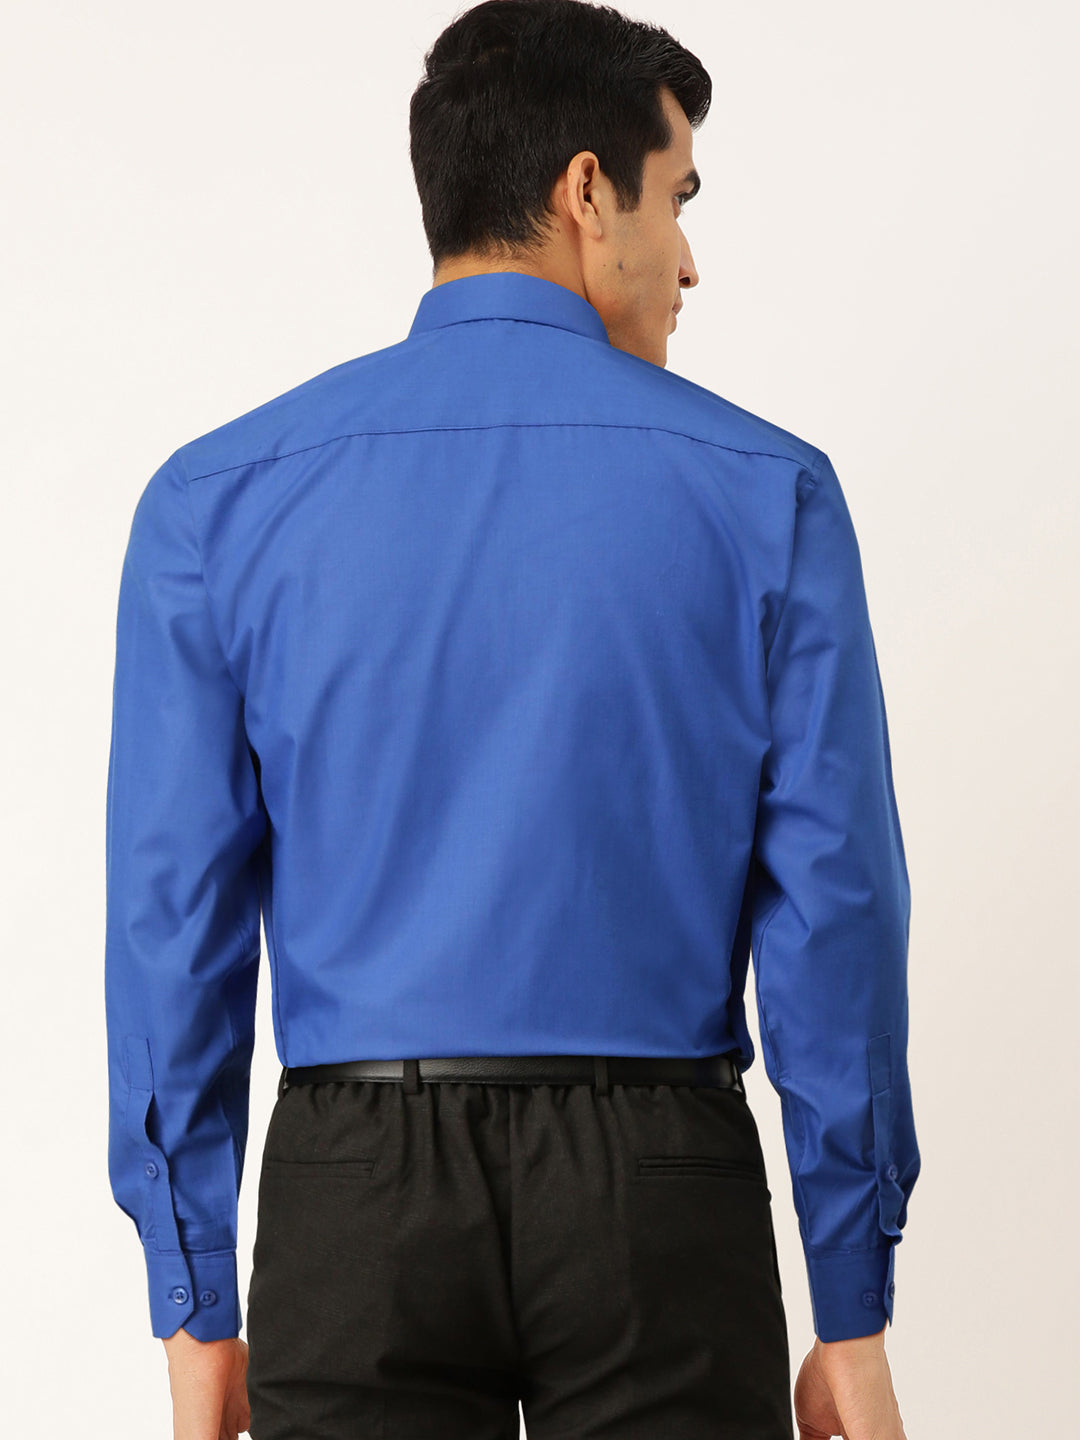 Men's Cotton Solid Royal Blue Formal Shirt's ( SF 361Royal ) - Jainish